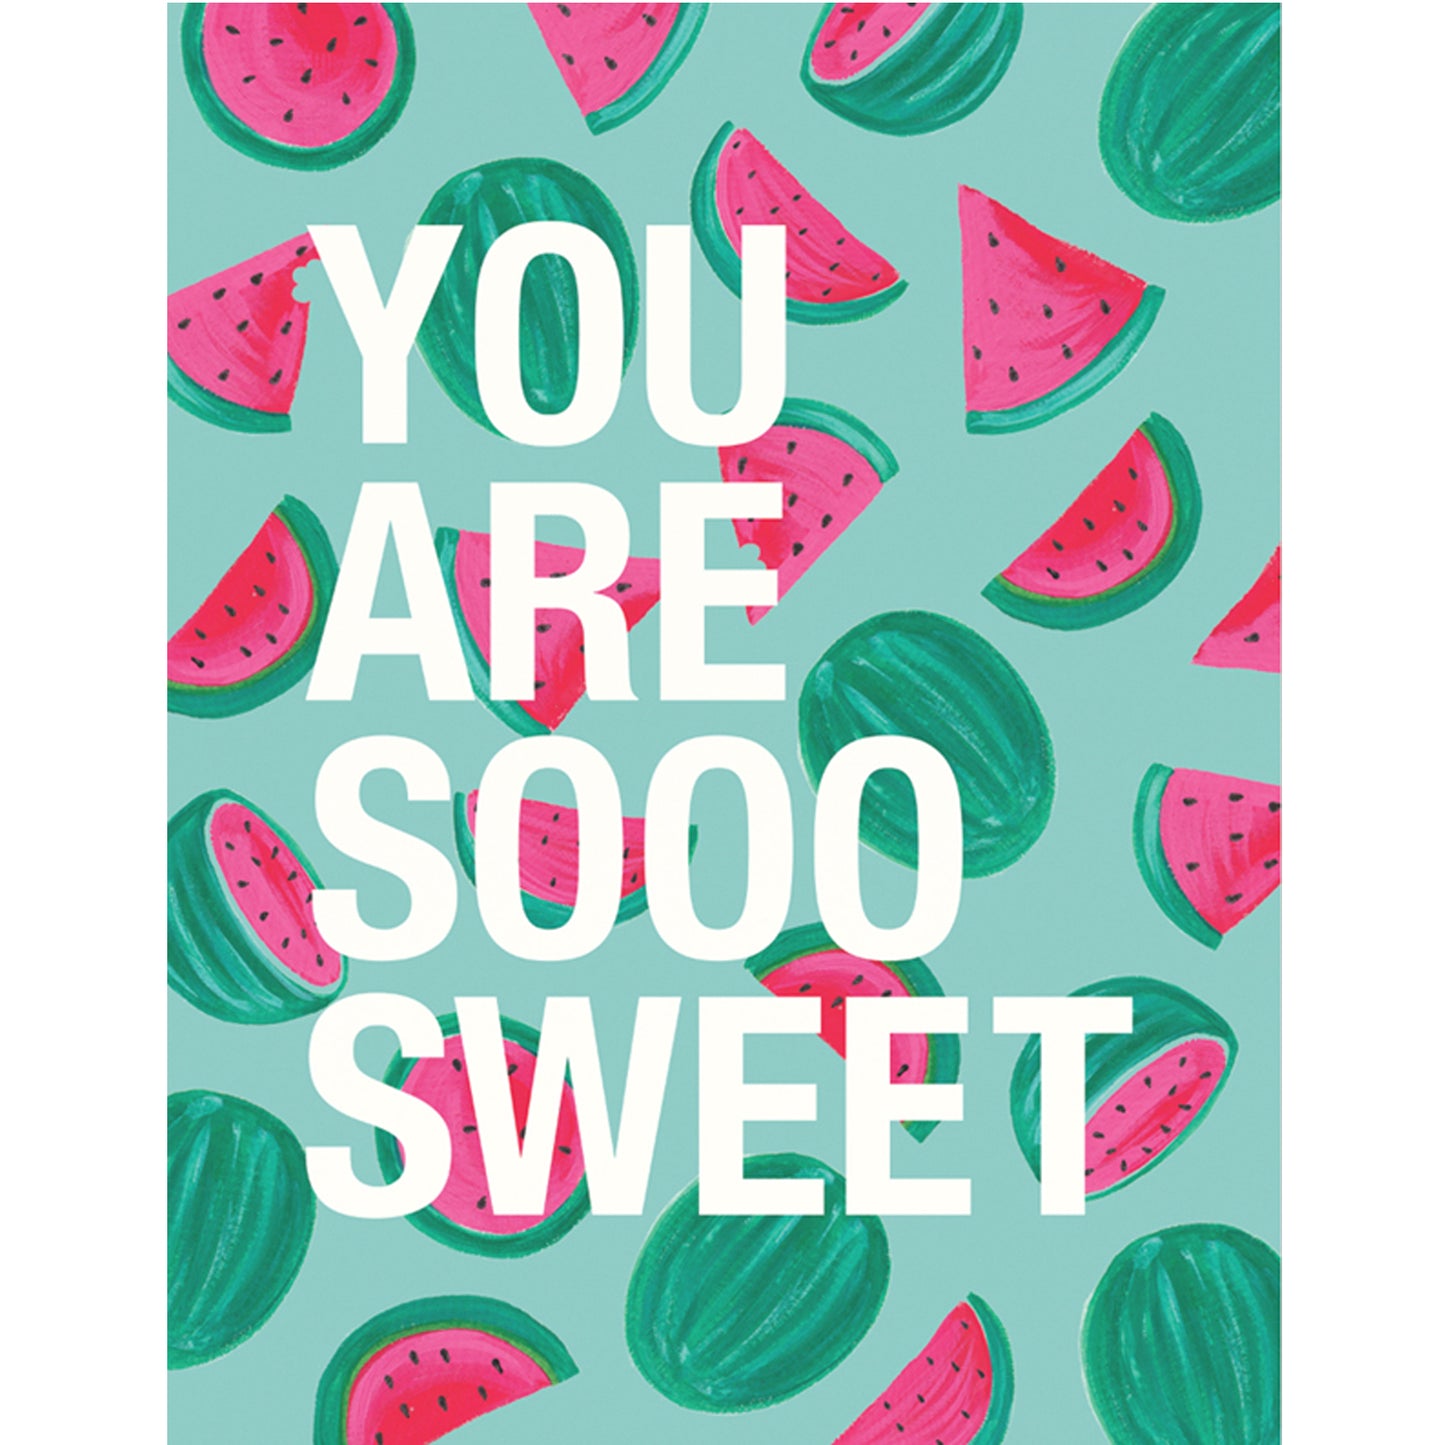 You are sooo sweet